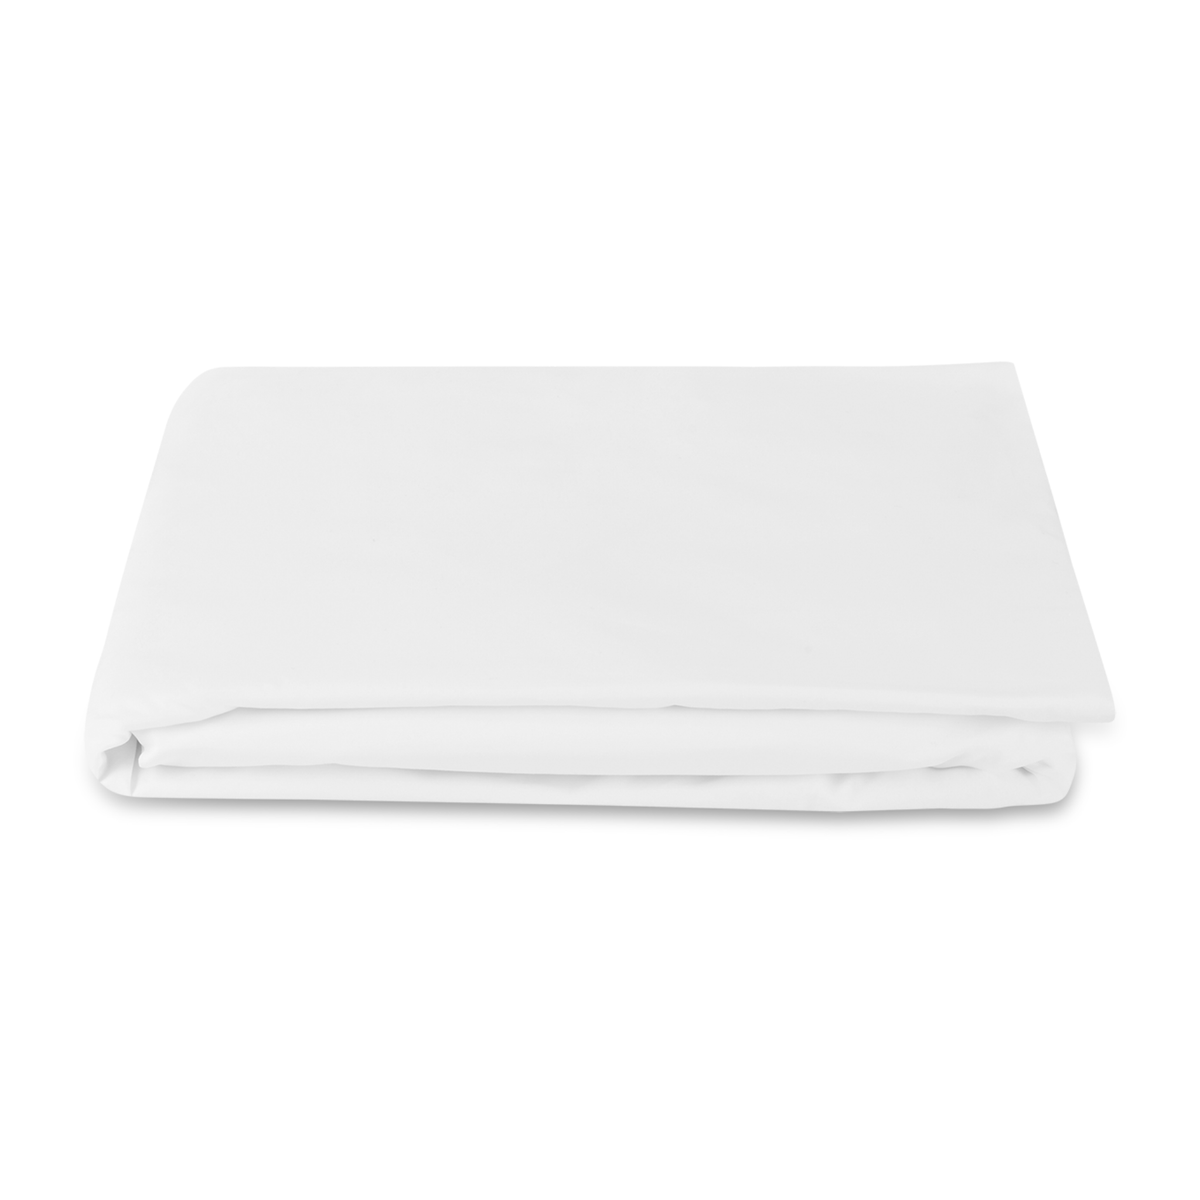 White Folded Fitted Sheet of Matouk Bergamo Bedding